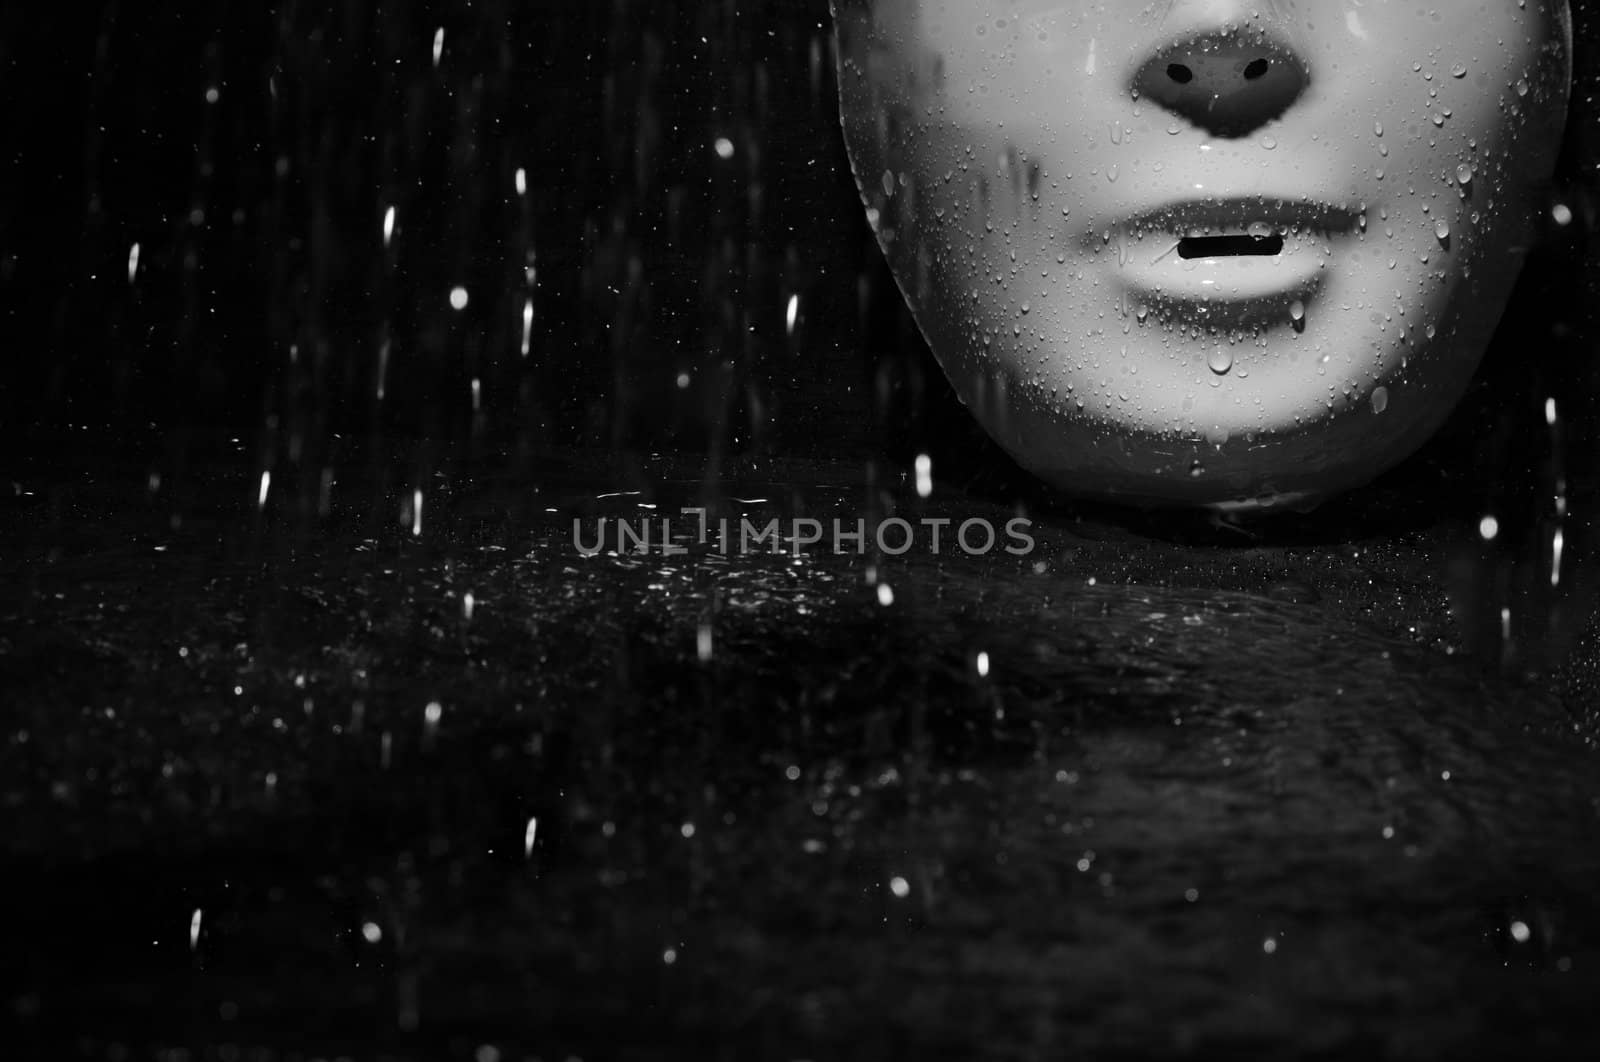 Mask and rain by Novic